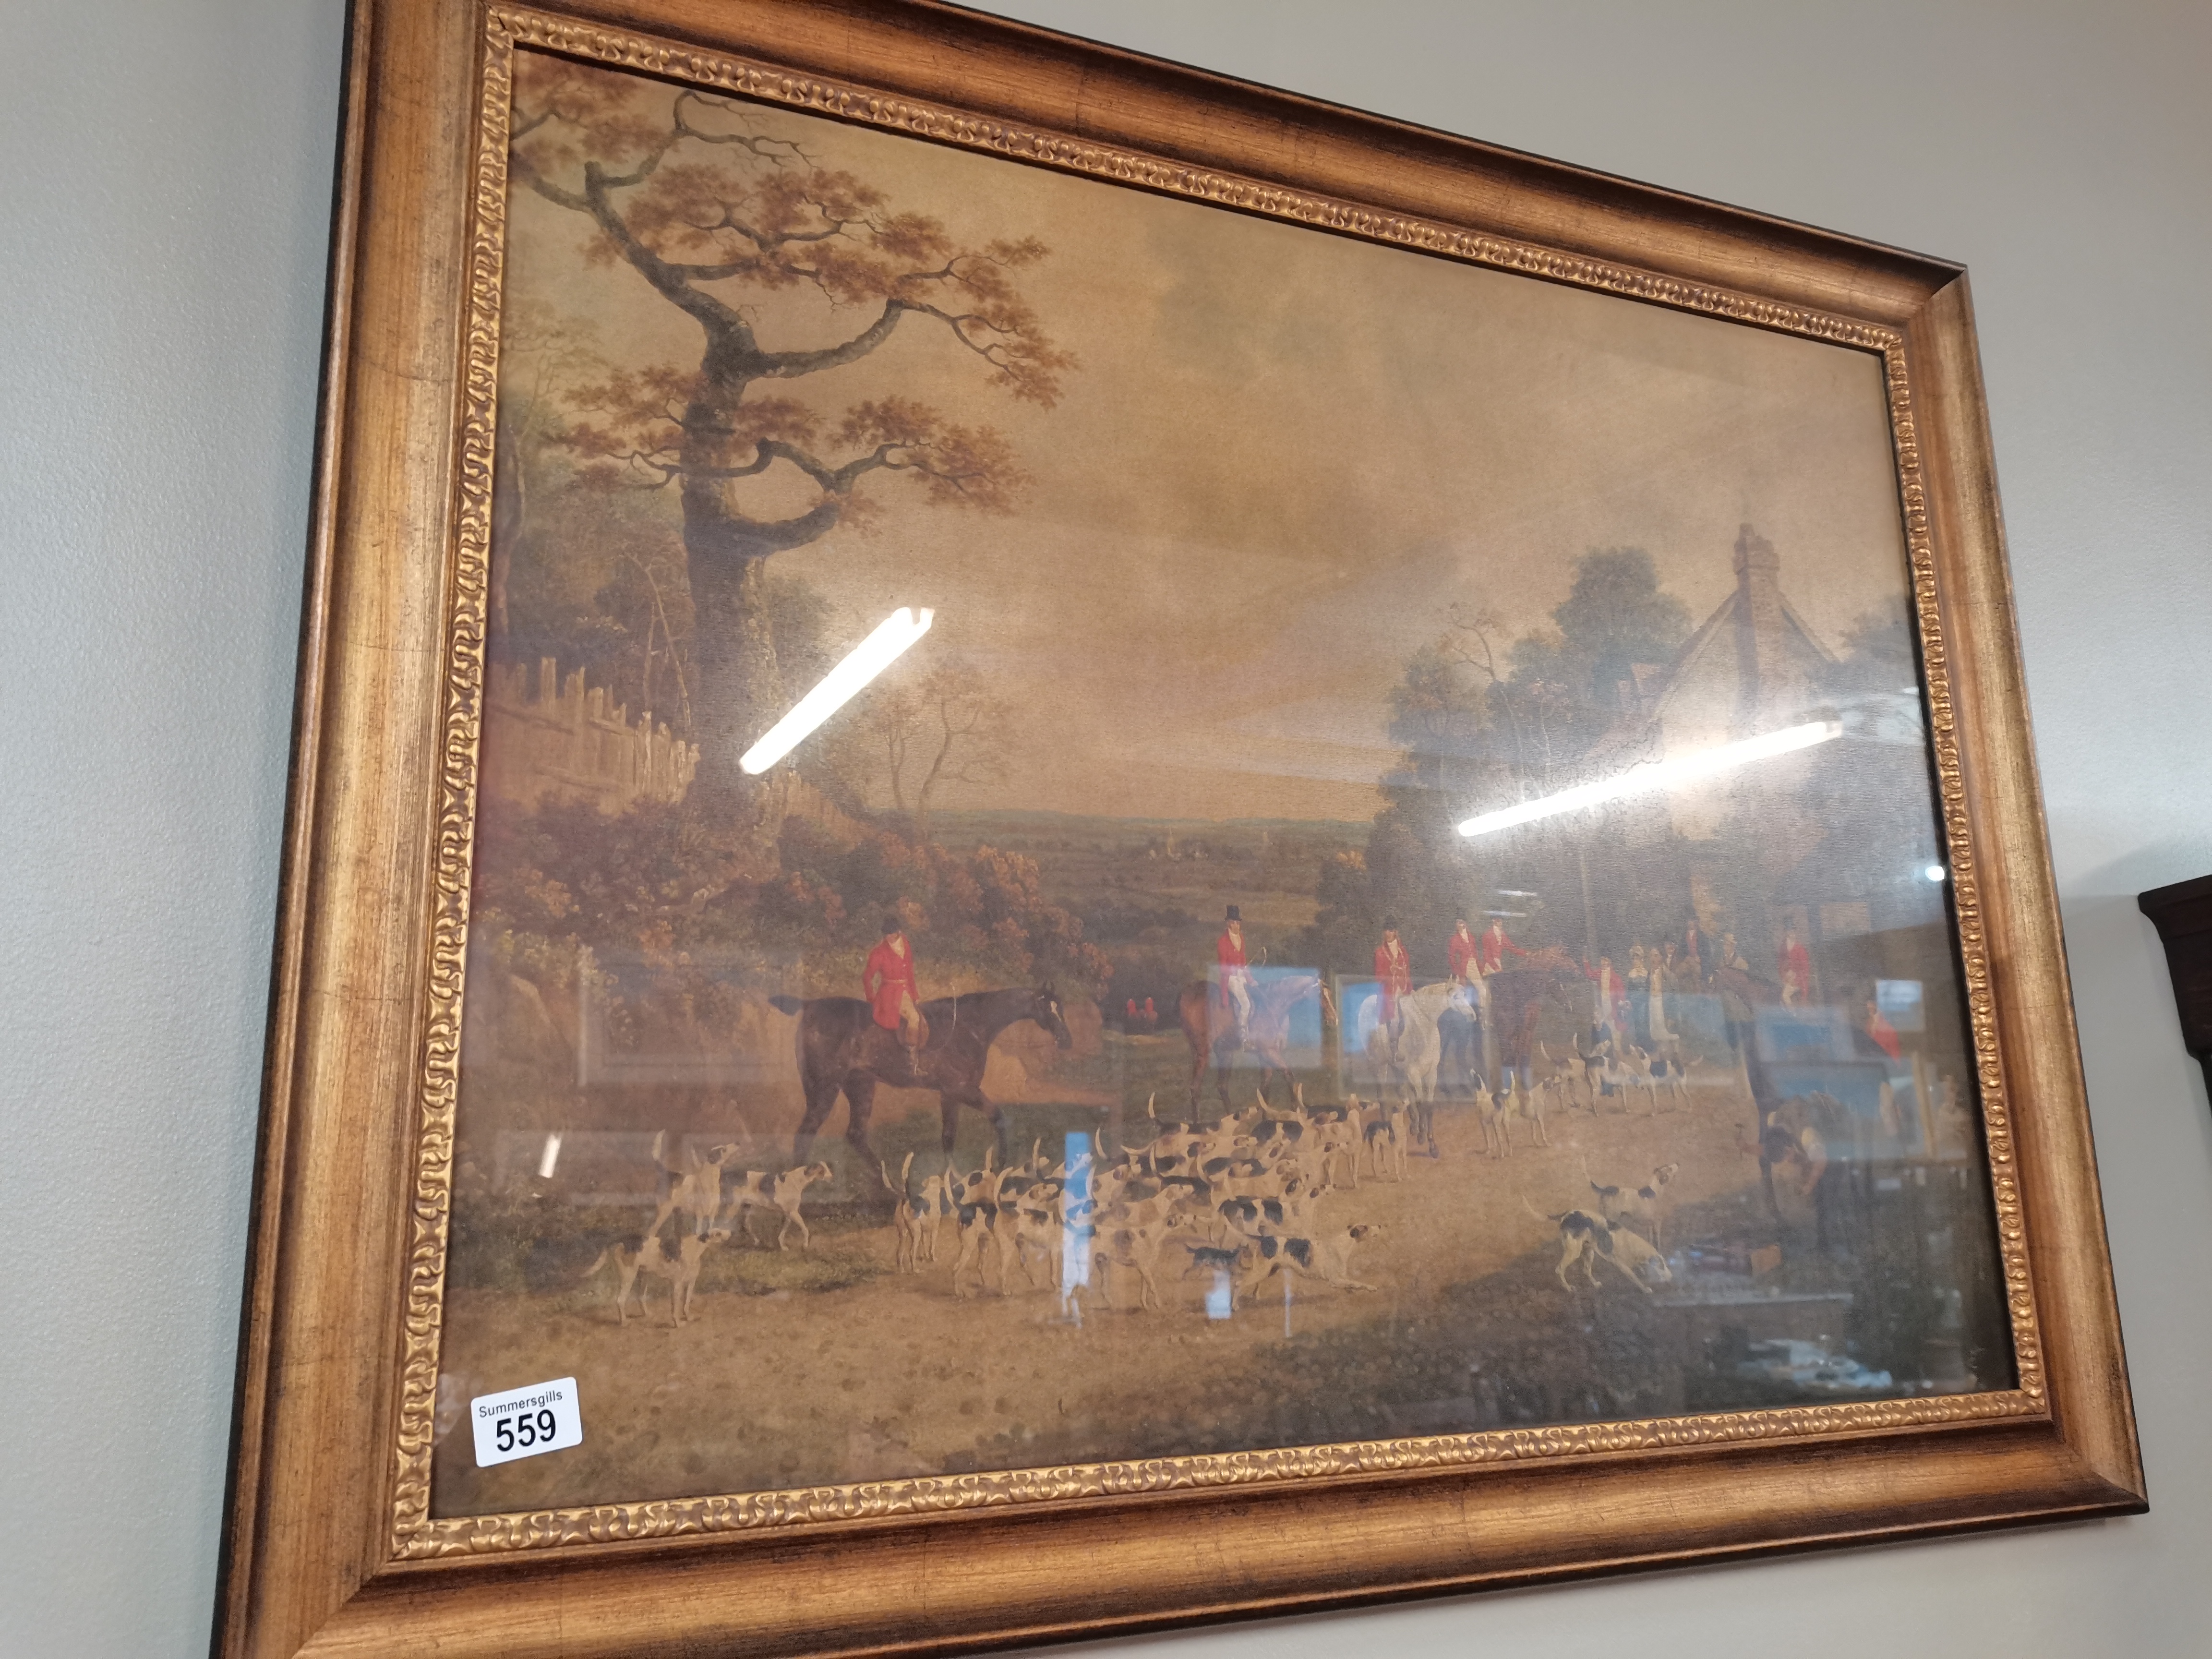 A Large Print framed Hunting scene